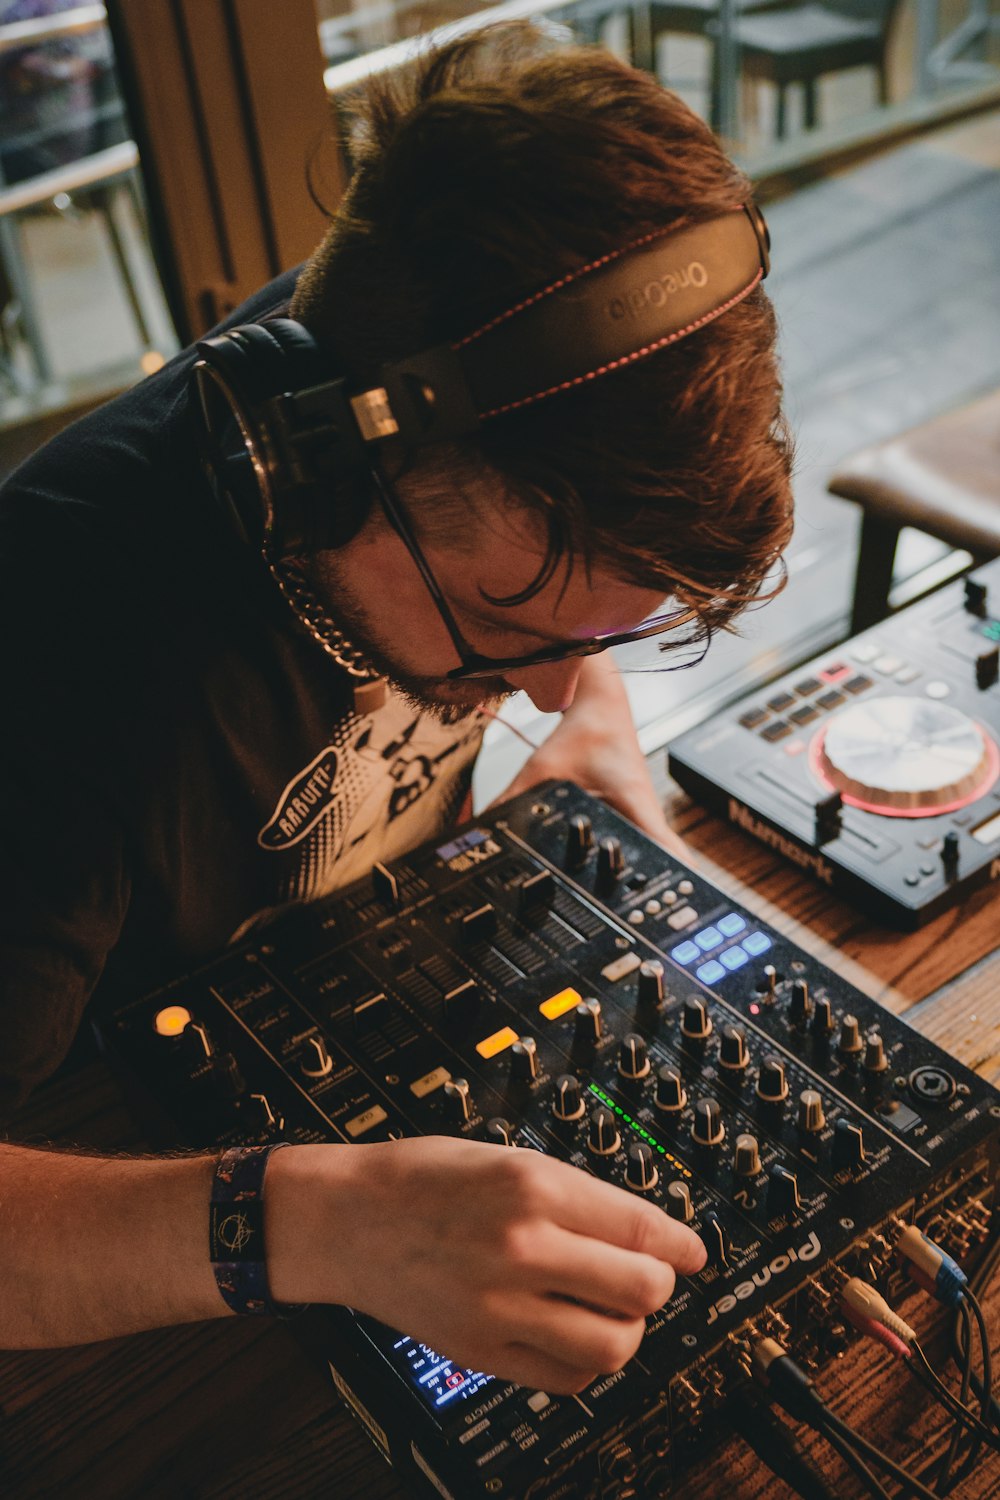 man in black t-shirt playing audio mixer